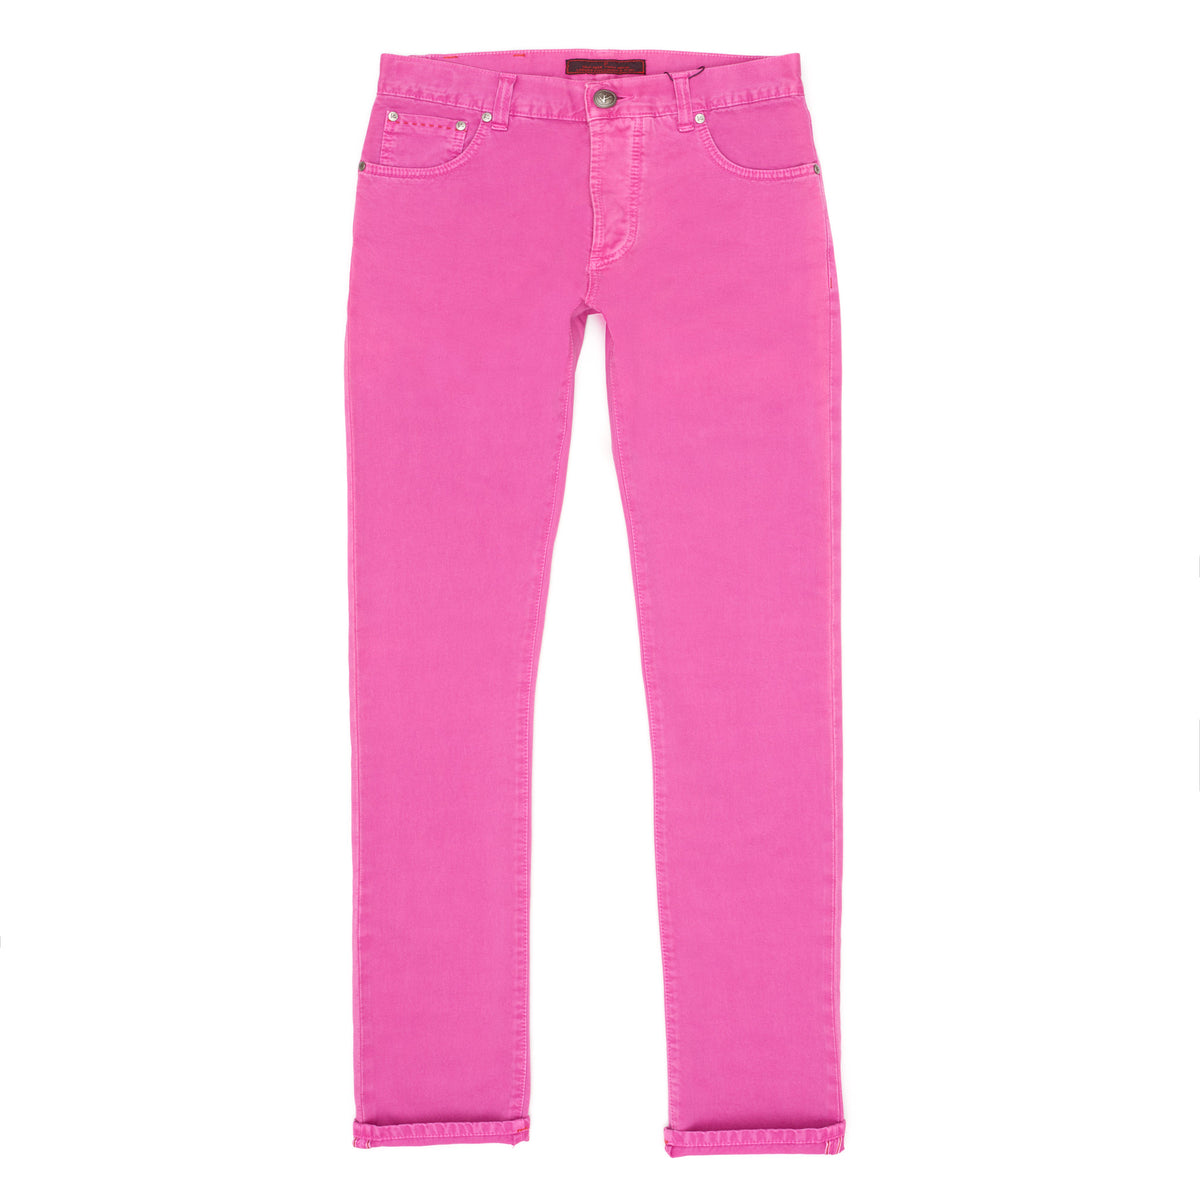 ISAIA Napoli Pink Denim Selvedge Jeans Pants NEW US 31 Slim Fit